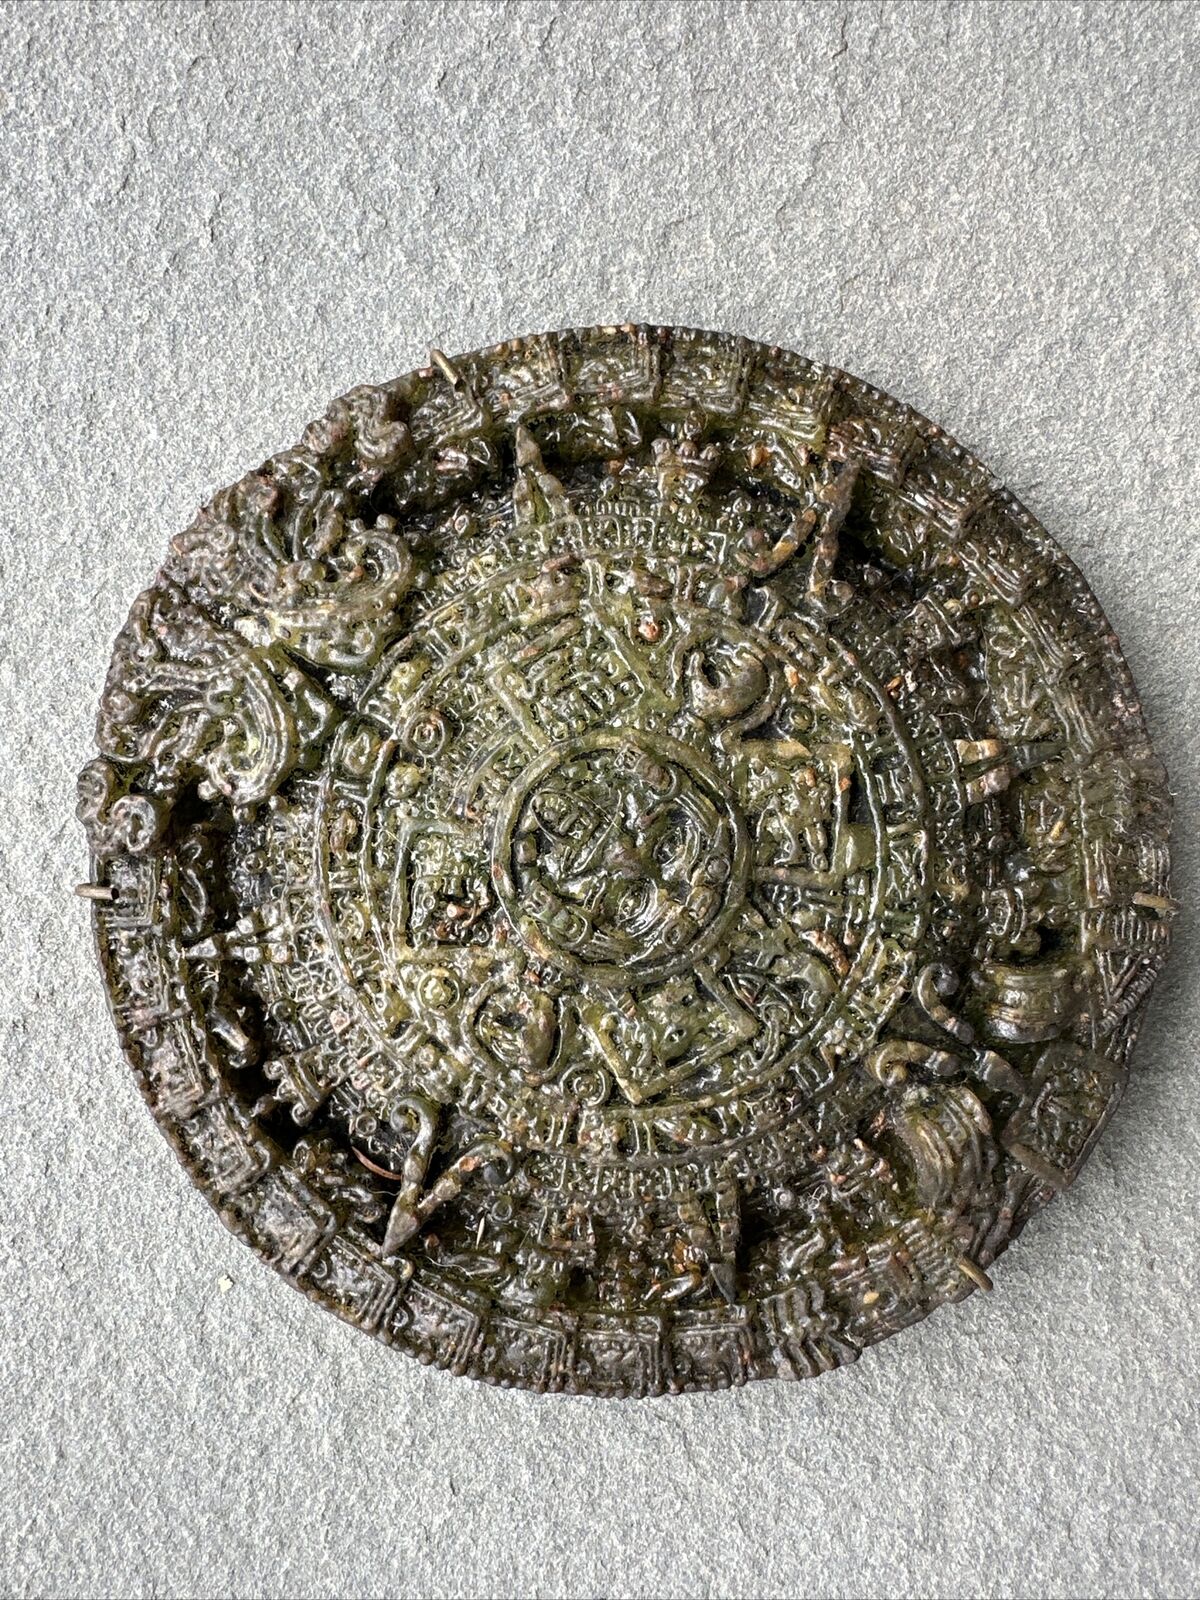 Aztec Sun Calendar Green Crushed Malachite Stone Mexican Cuauhxicalli 7”